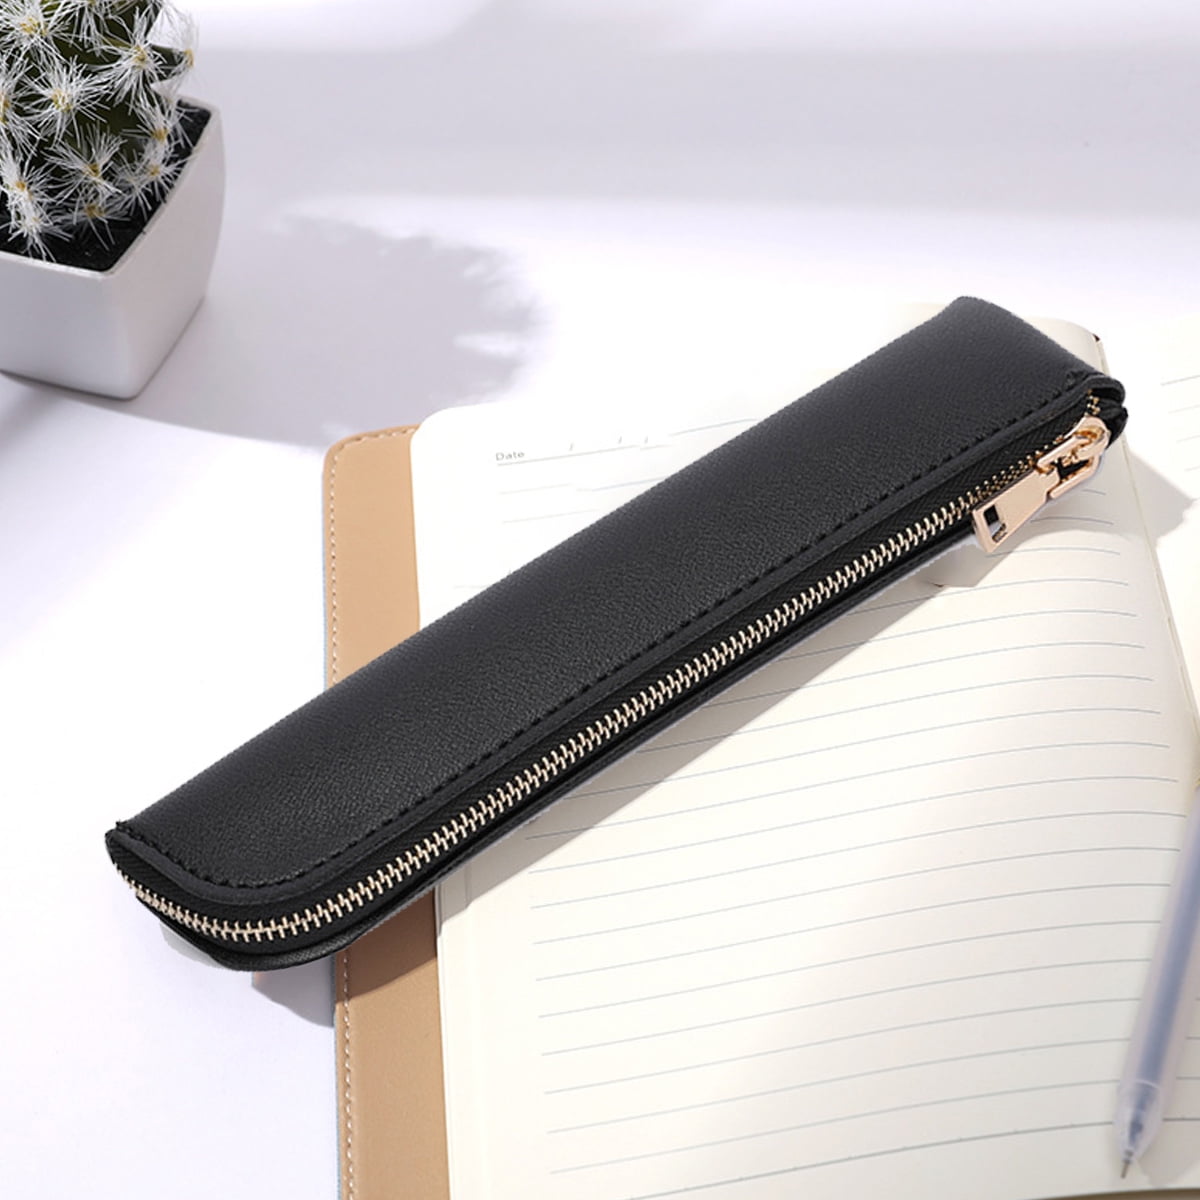 Leather pencil case, Pen bag, Small pencil case for adults, Pen, Pencil &  Marker Cases, leather Mini pencil pouch with zipper - black 